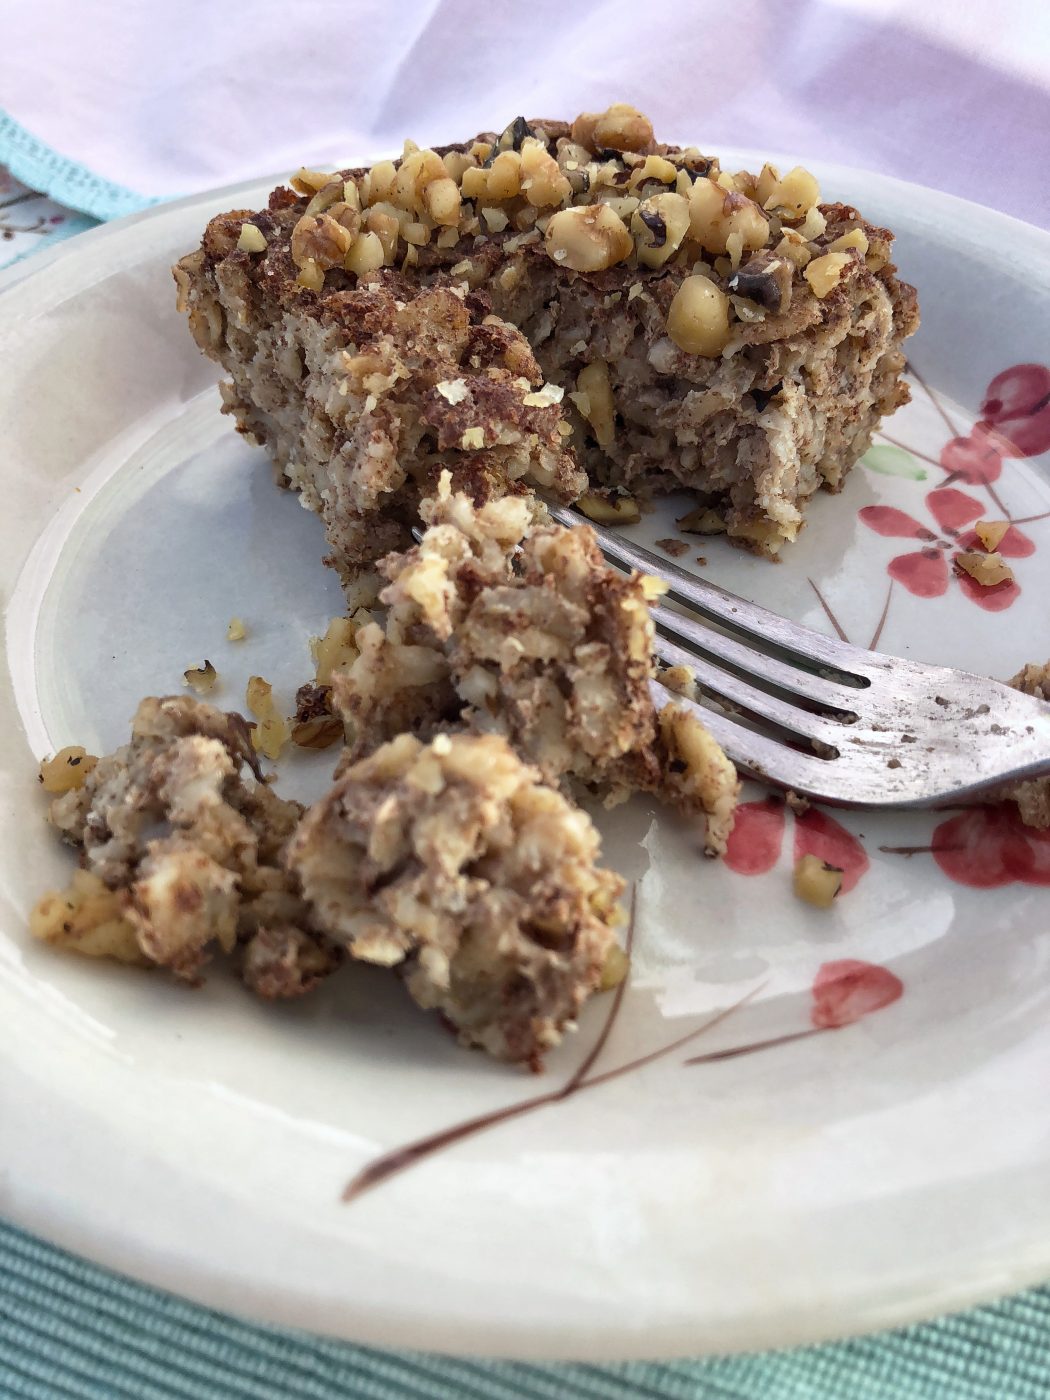 Blog: http://babblingpanda.com/2018/04/26/my-best-healthy-breakfast-finds-from-pinterest/ Recipe: http://lovegrowswild.com/2015/08/banana-bread-baked-oatmeal/